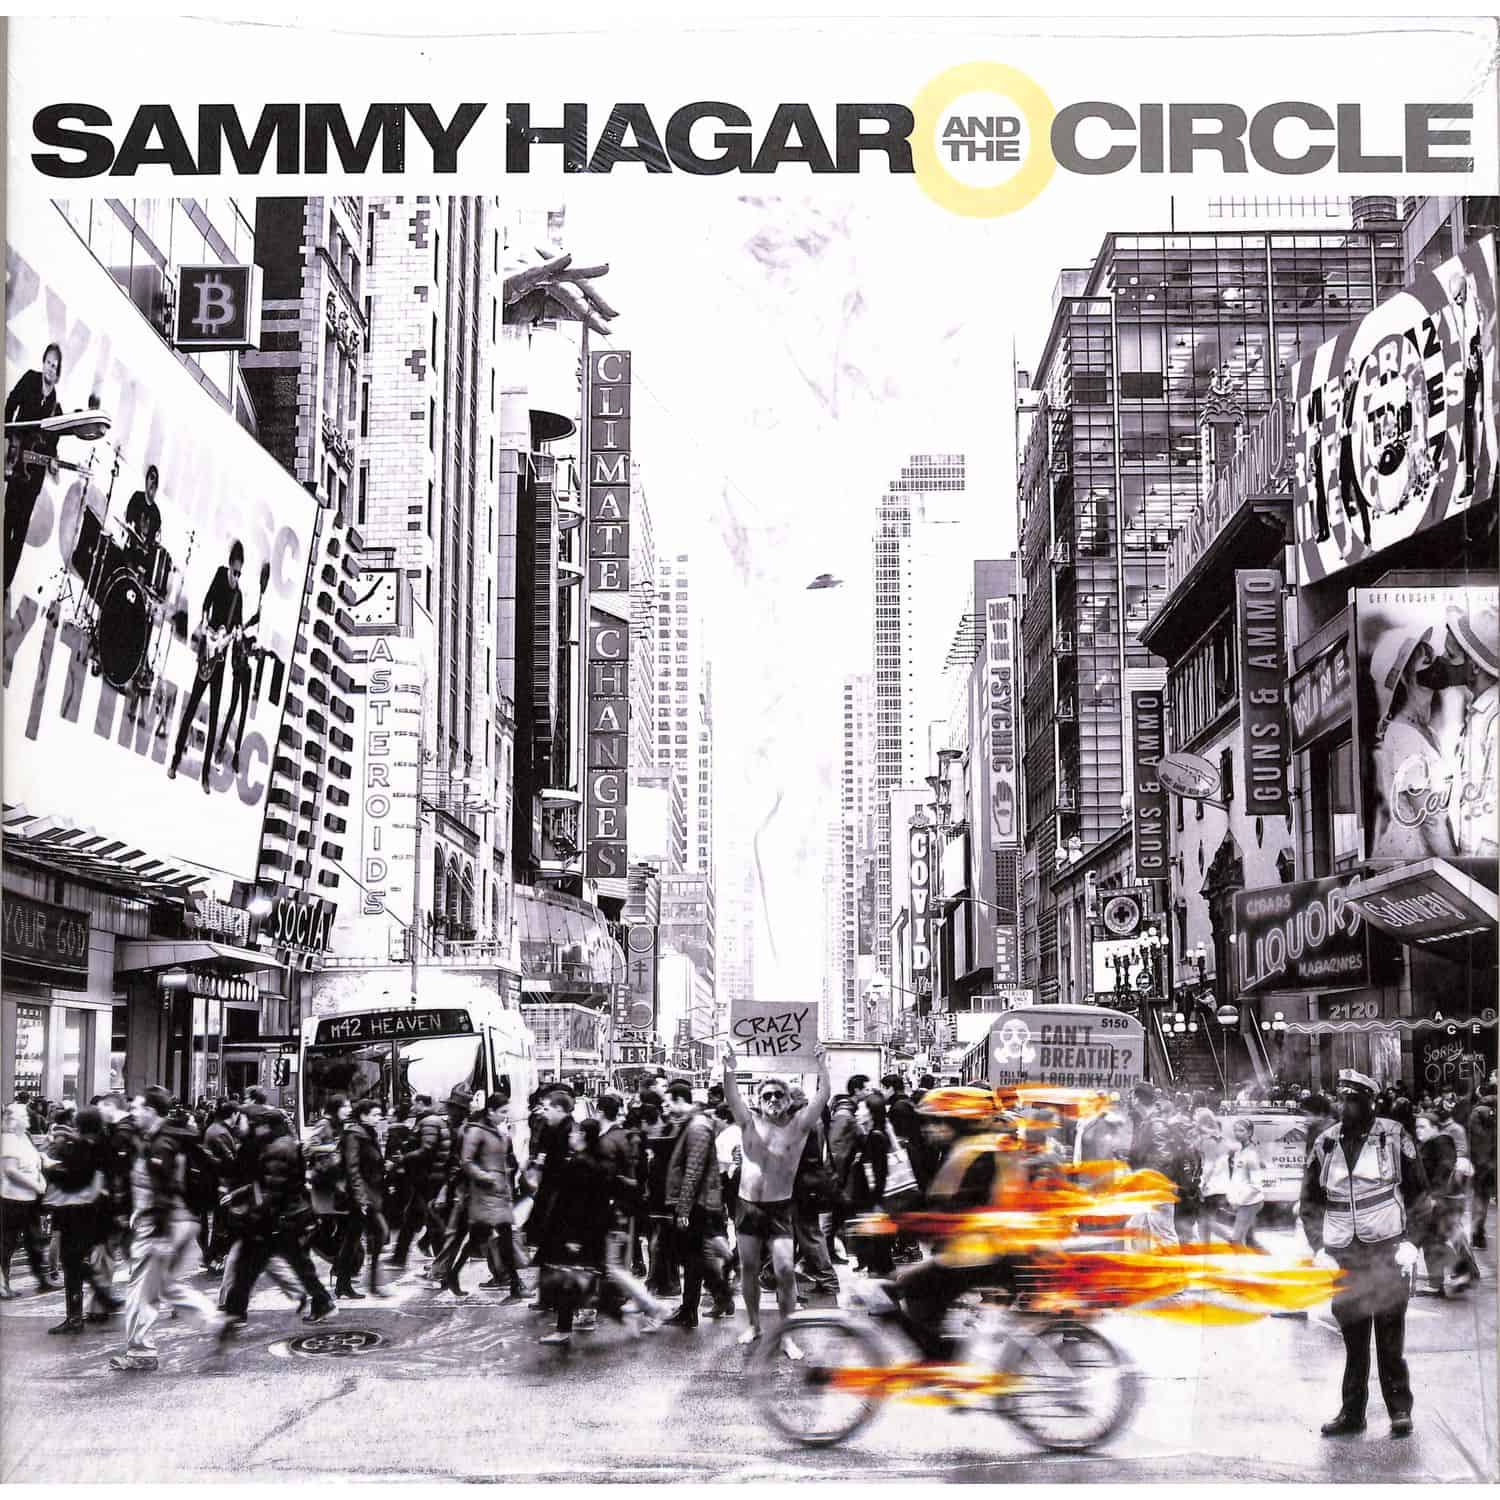 Sammy Hagar & The Circle - CRAZY TIMES 